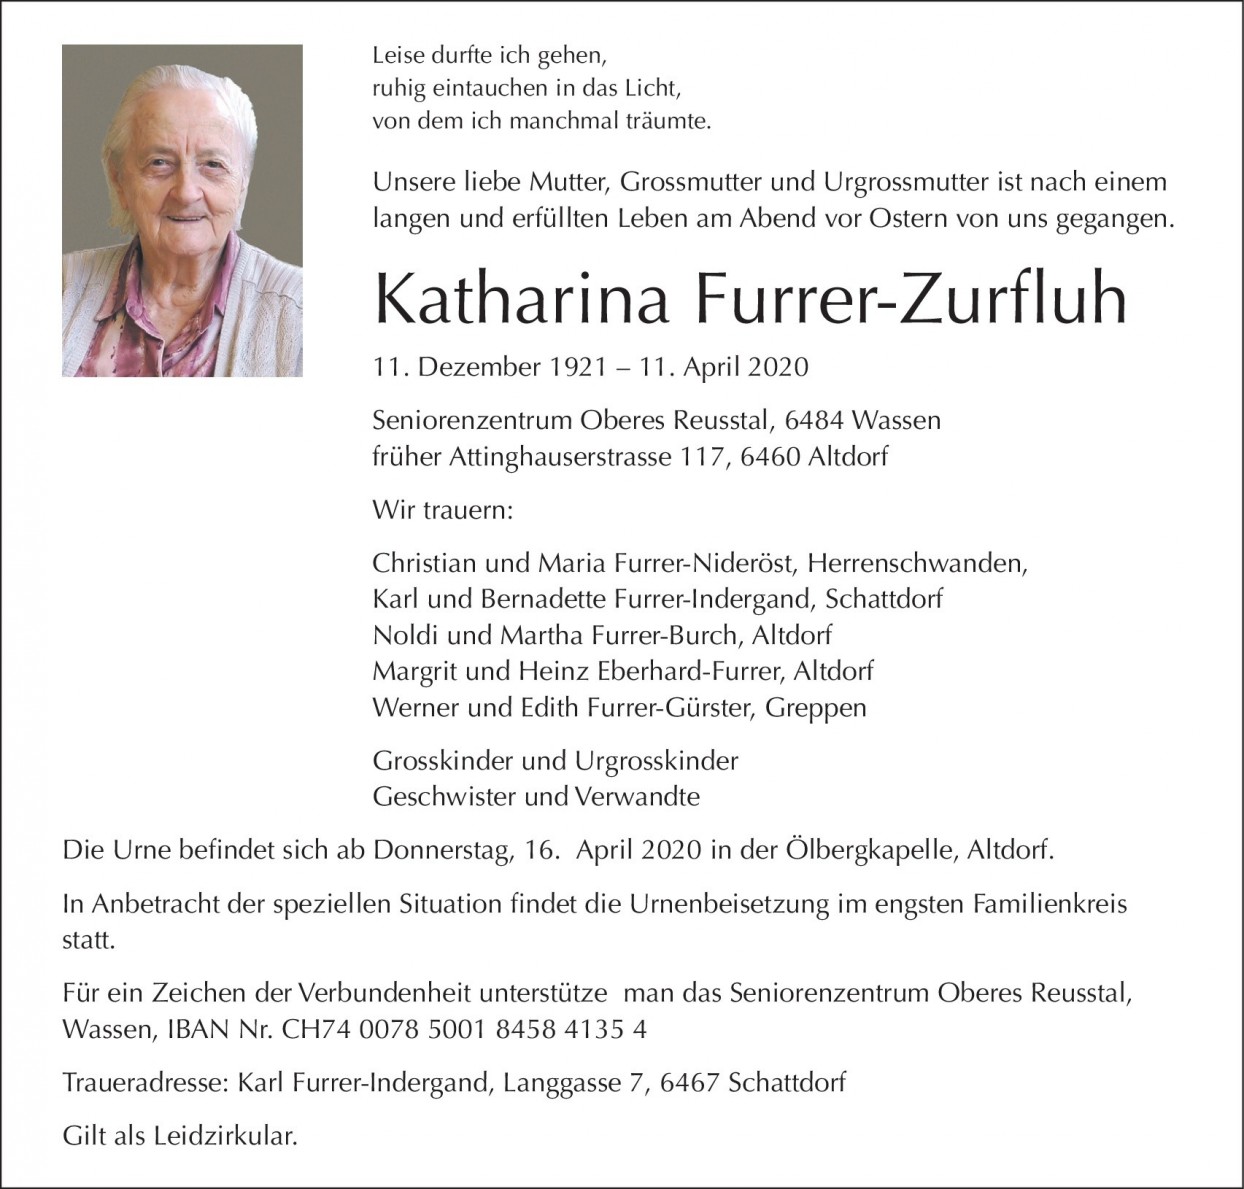 Katharina Furrer-Zurfluh